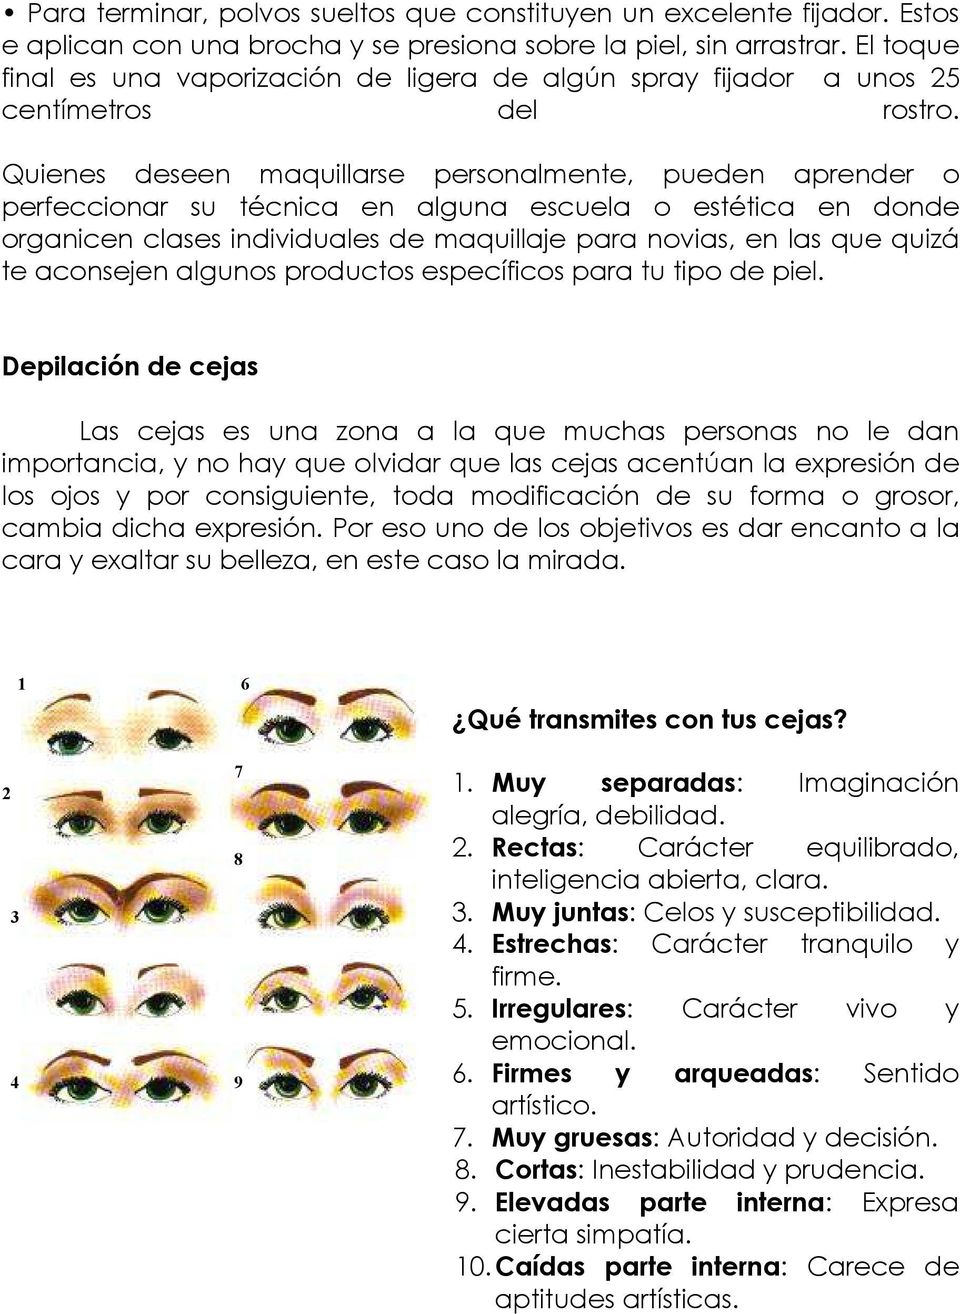 Maquillaje Profesional - PDF Descargar libre